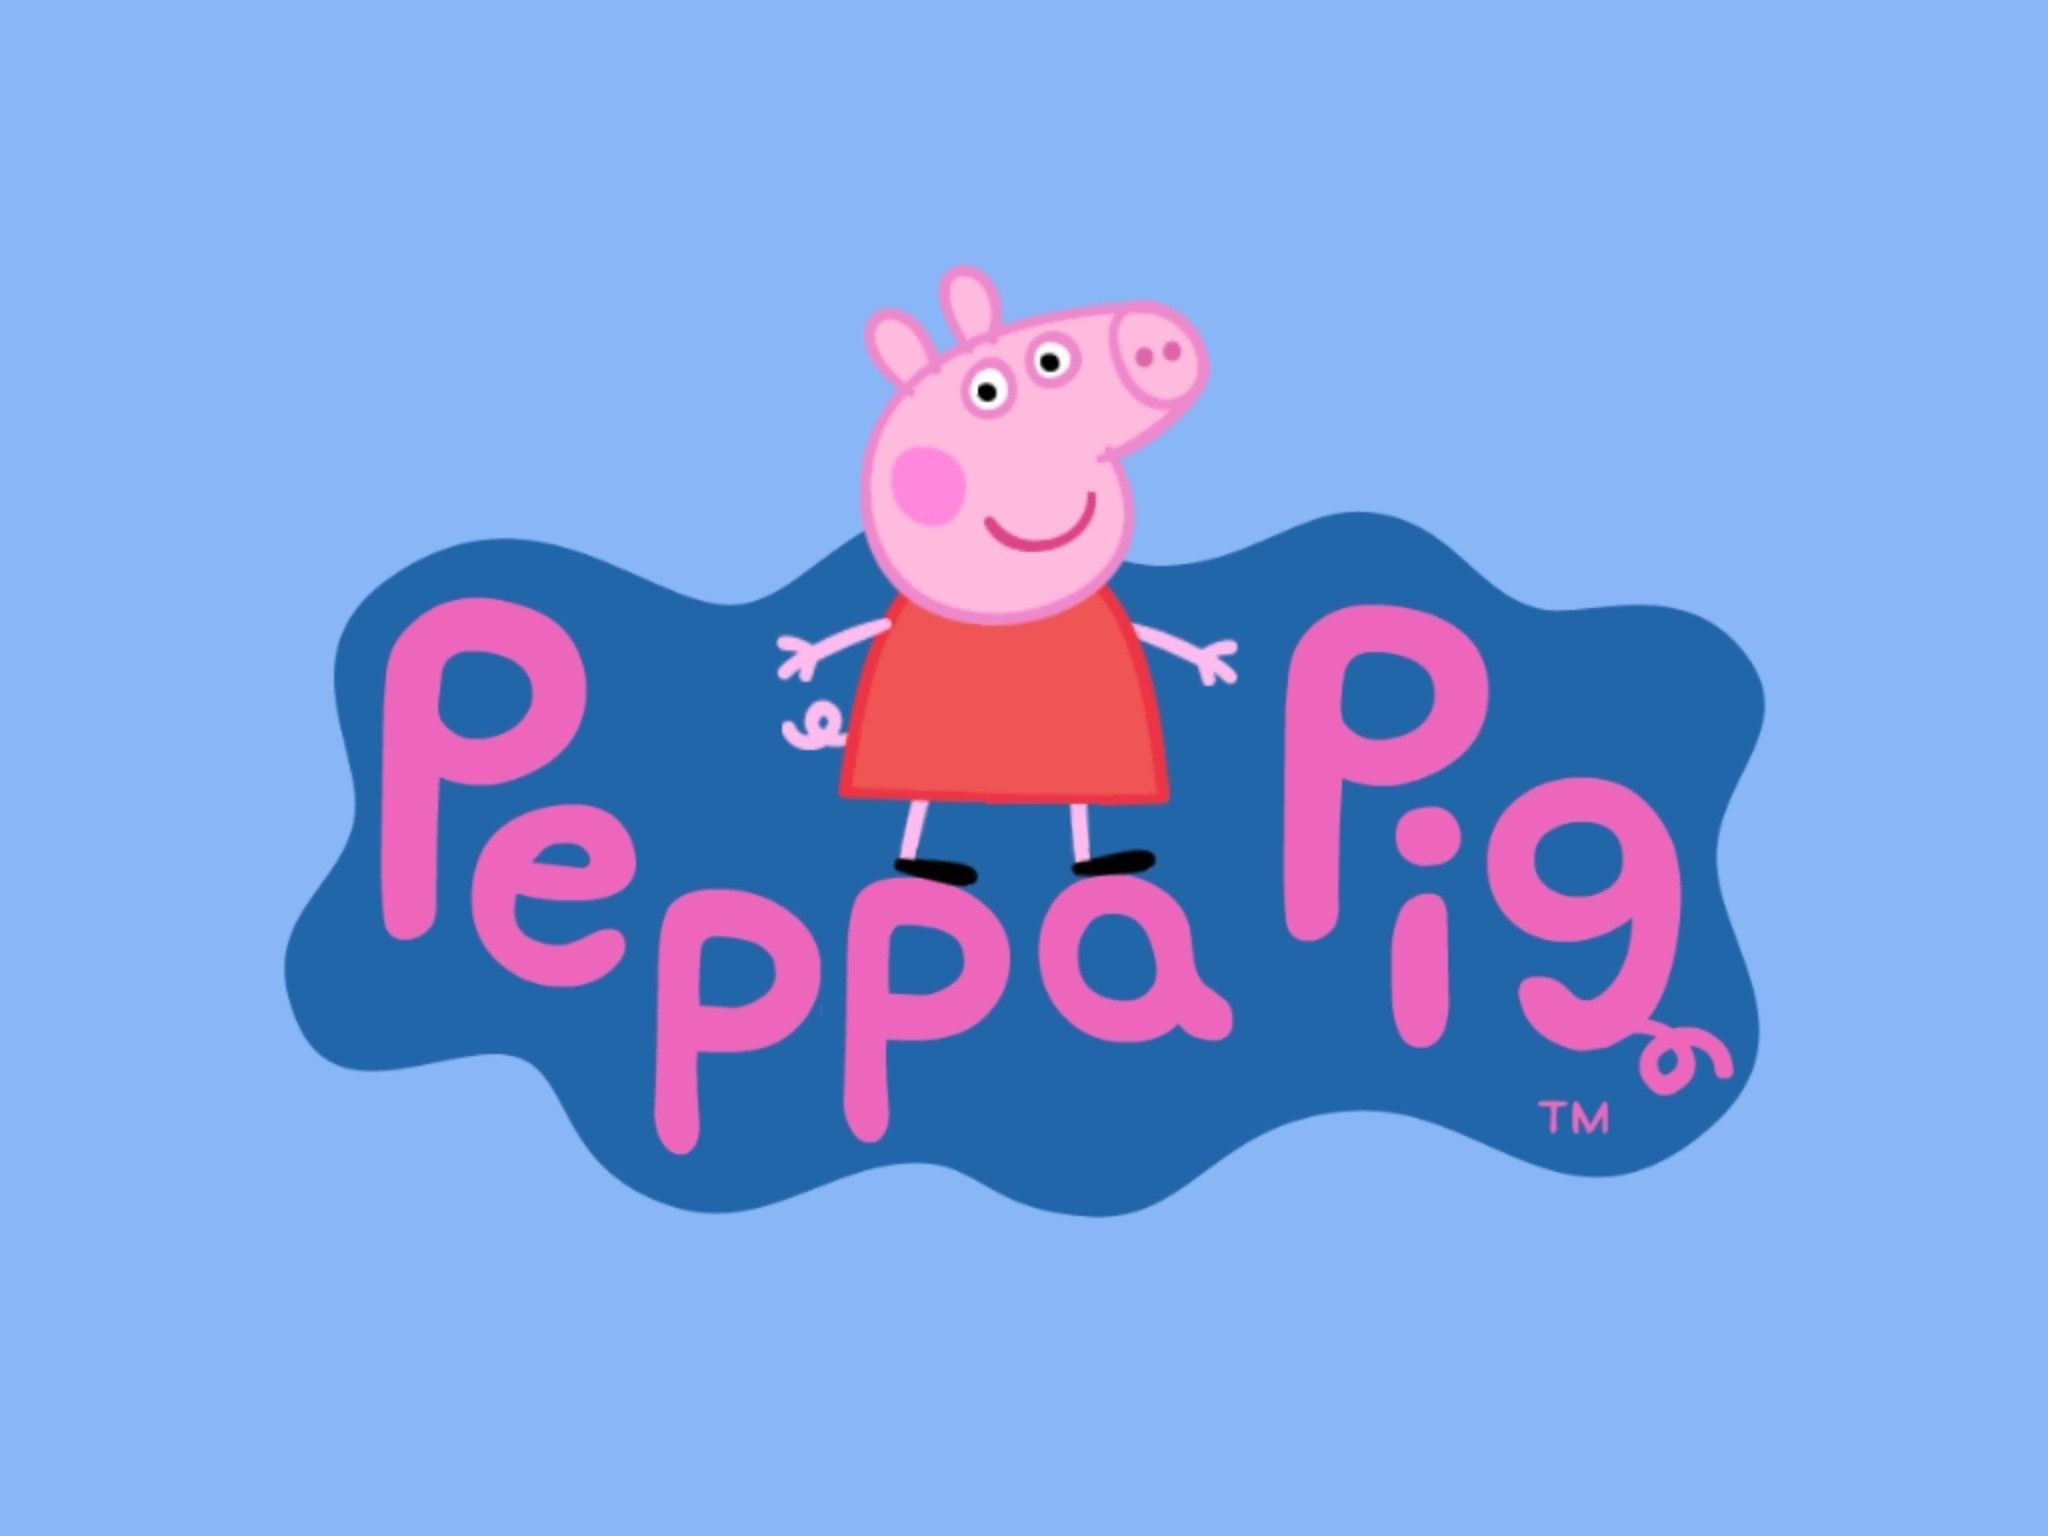 Best HD Wallpaper, Peppa Pig Wallpaper For iPhone